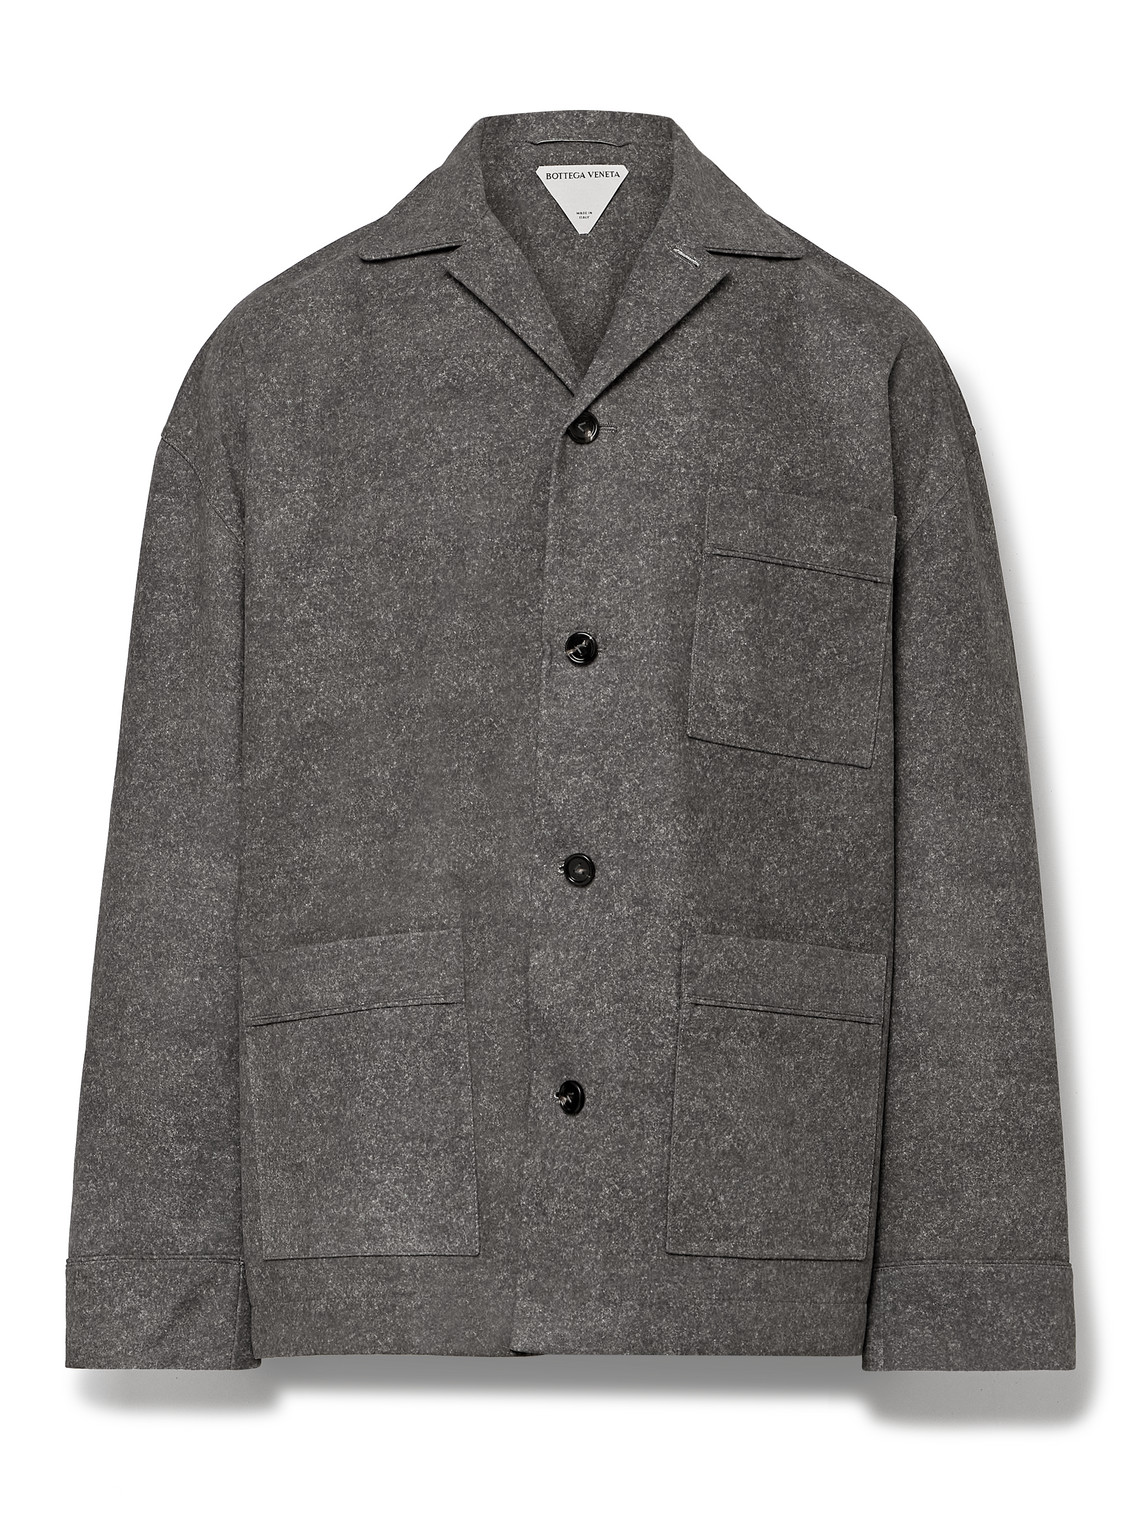 Bottega Veneta - Printed Nubuck Jacket - Men - Gray - IT 50 von Bottega Veneta